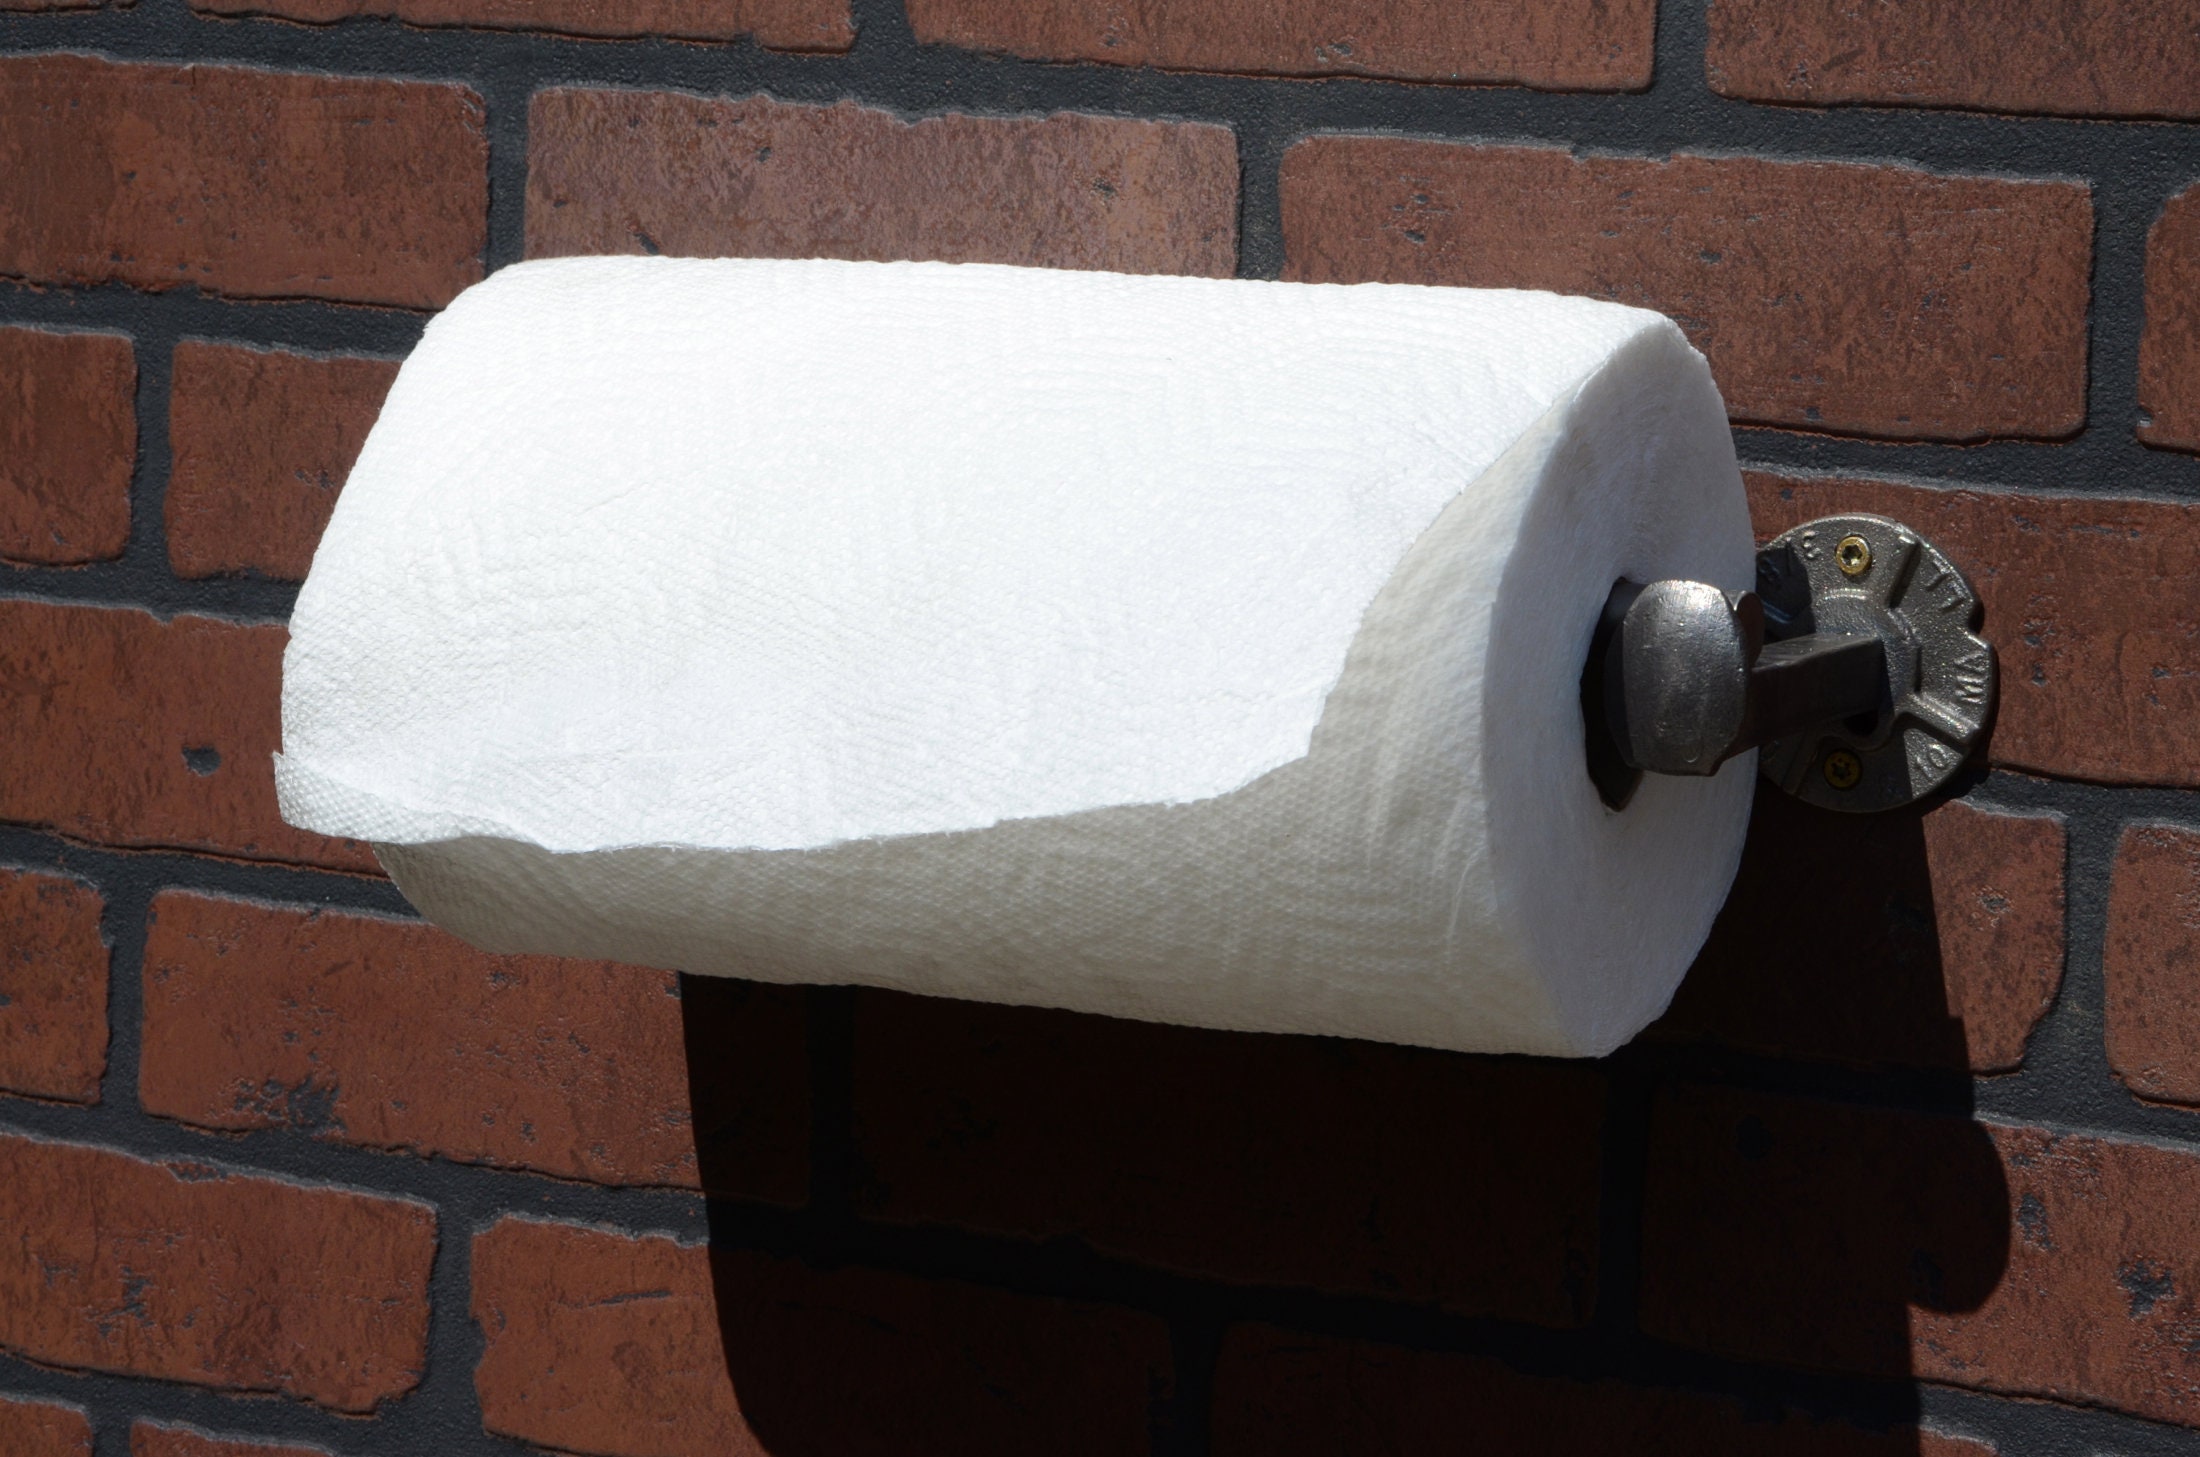 Crescent shape wall mount paper towel holder